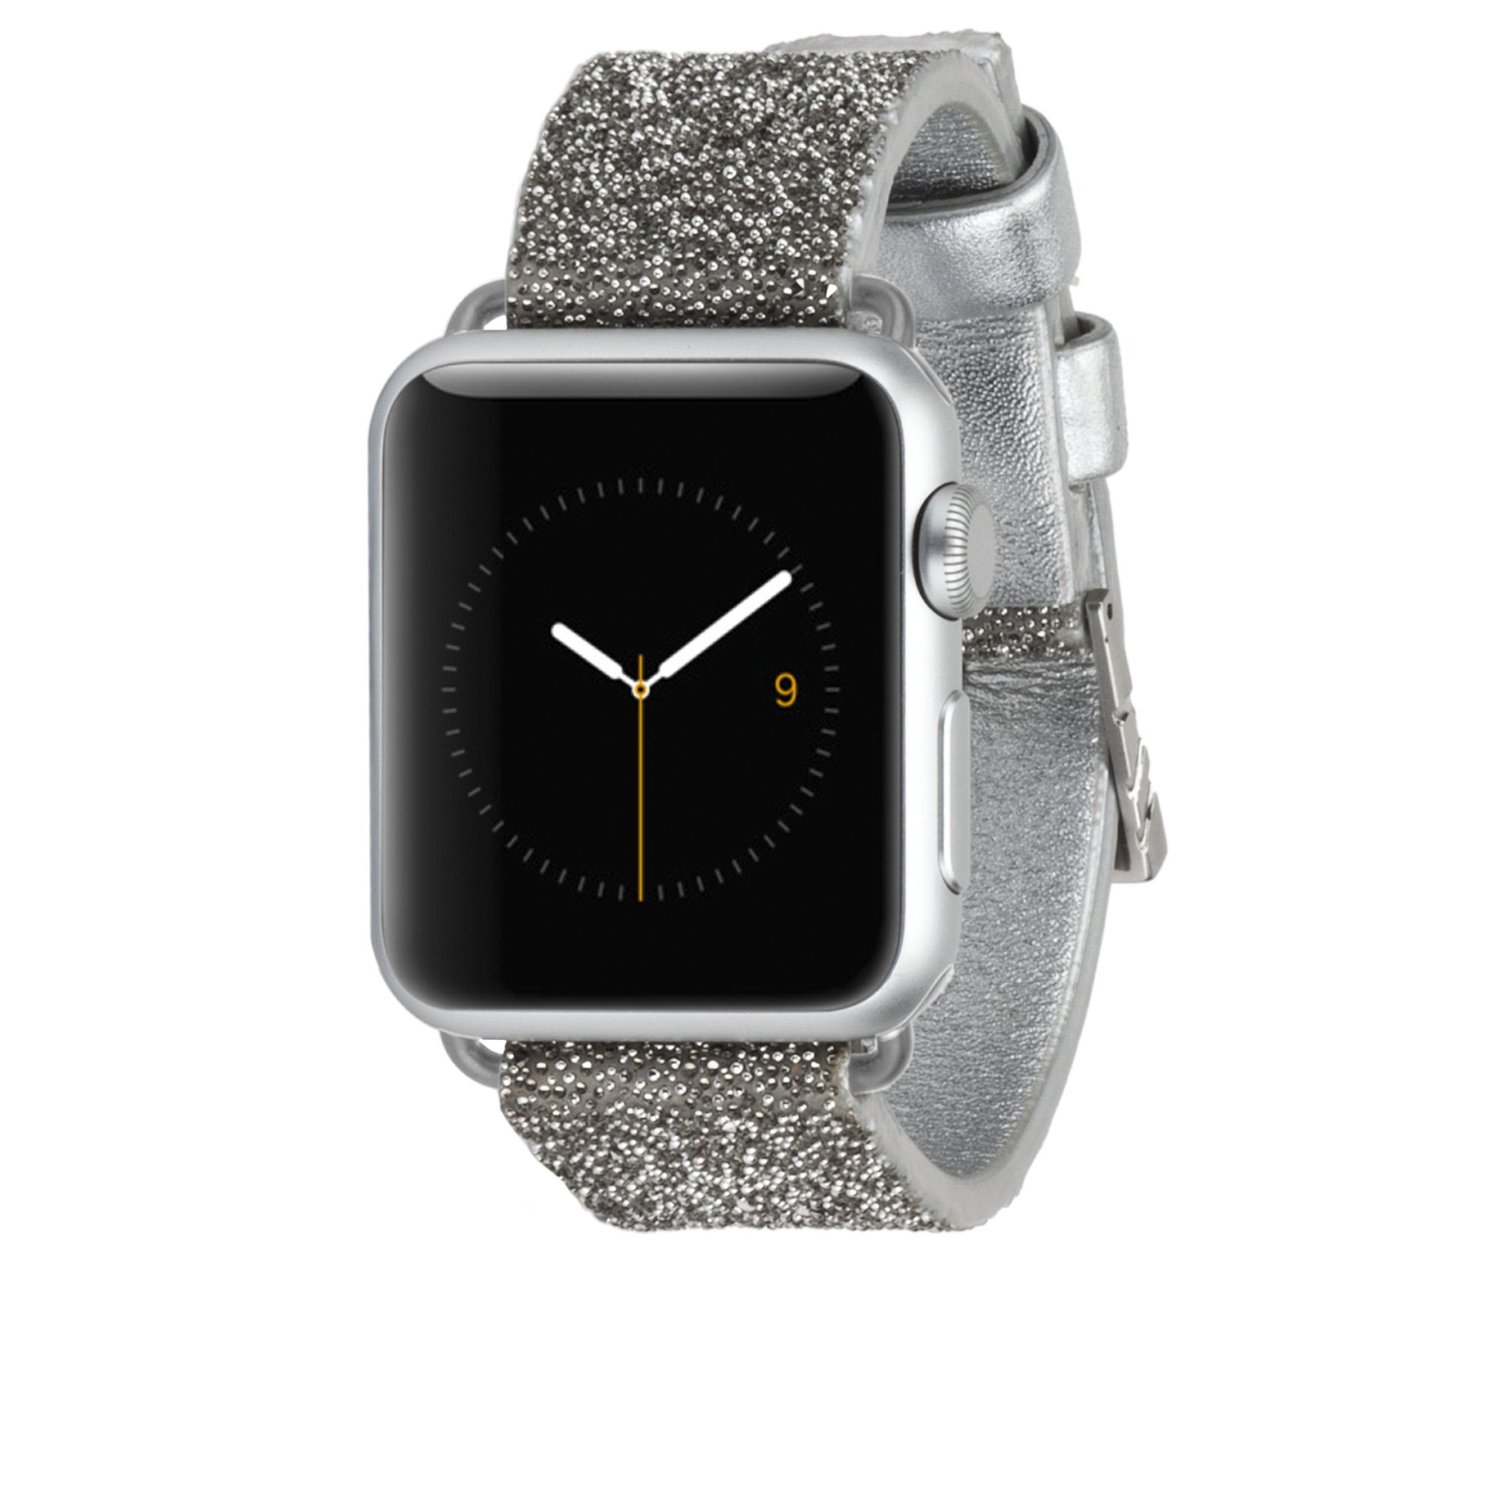 apple watch accessories, apple watch strap, apple watch bands